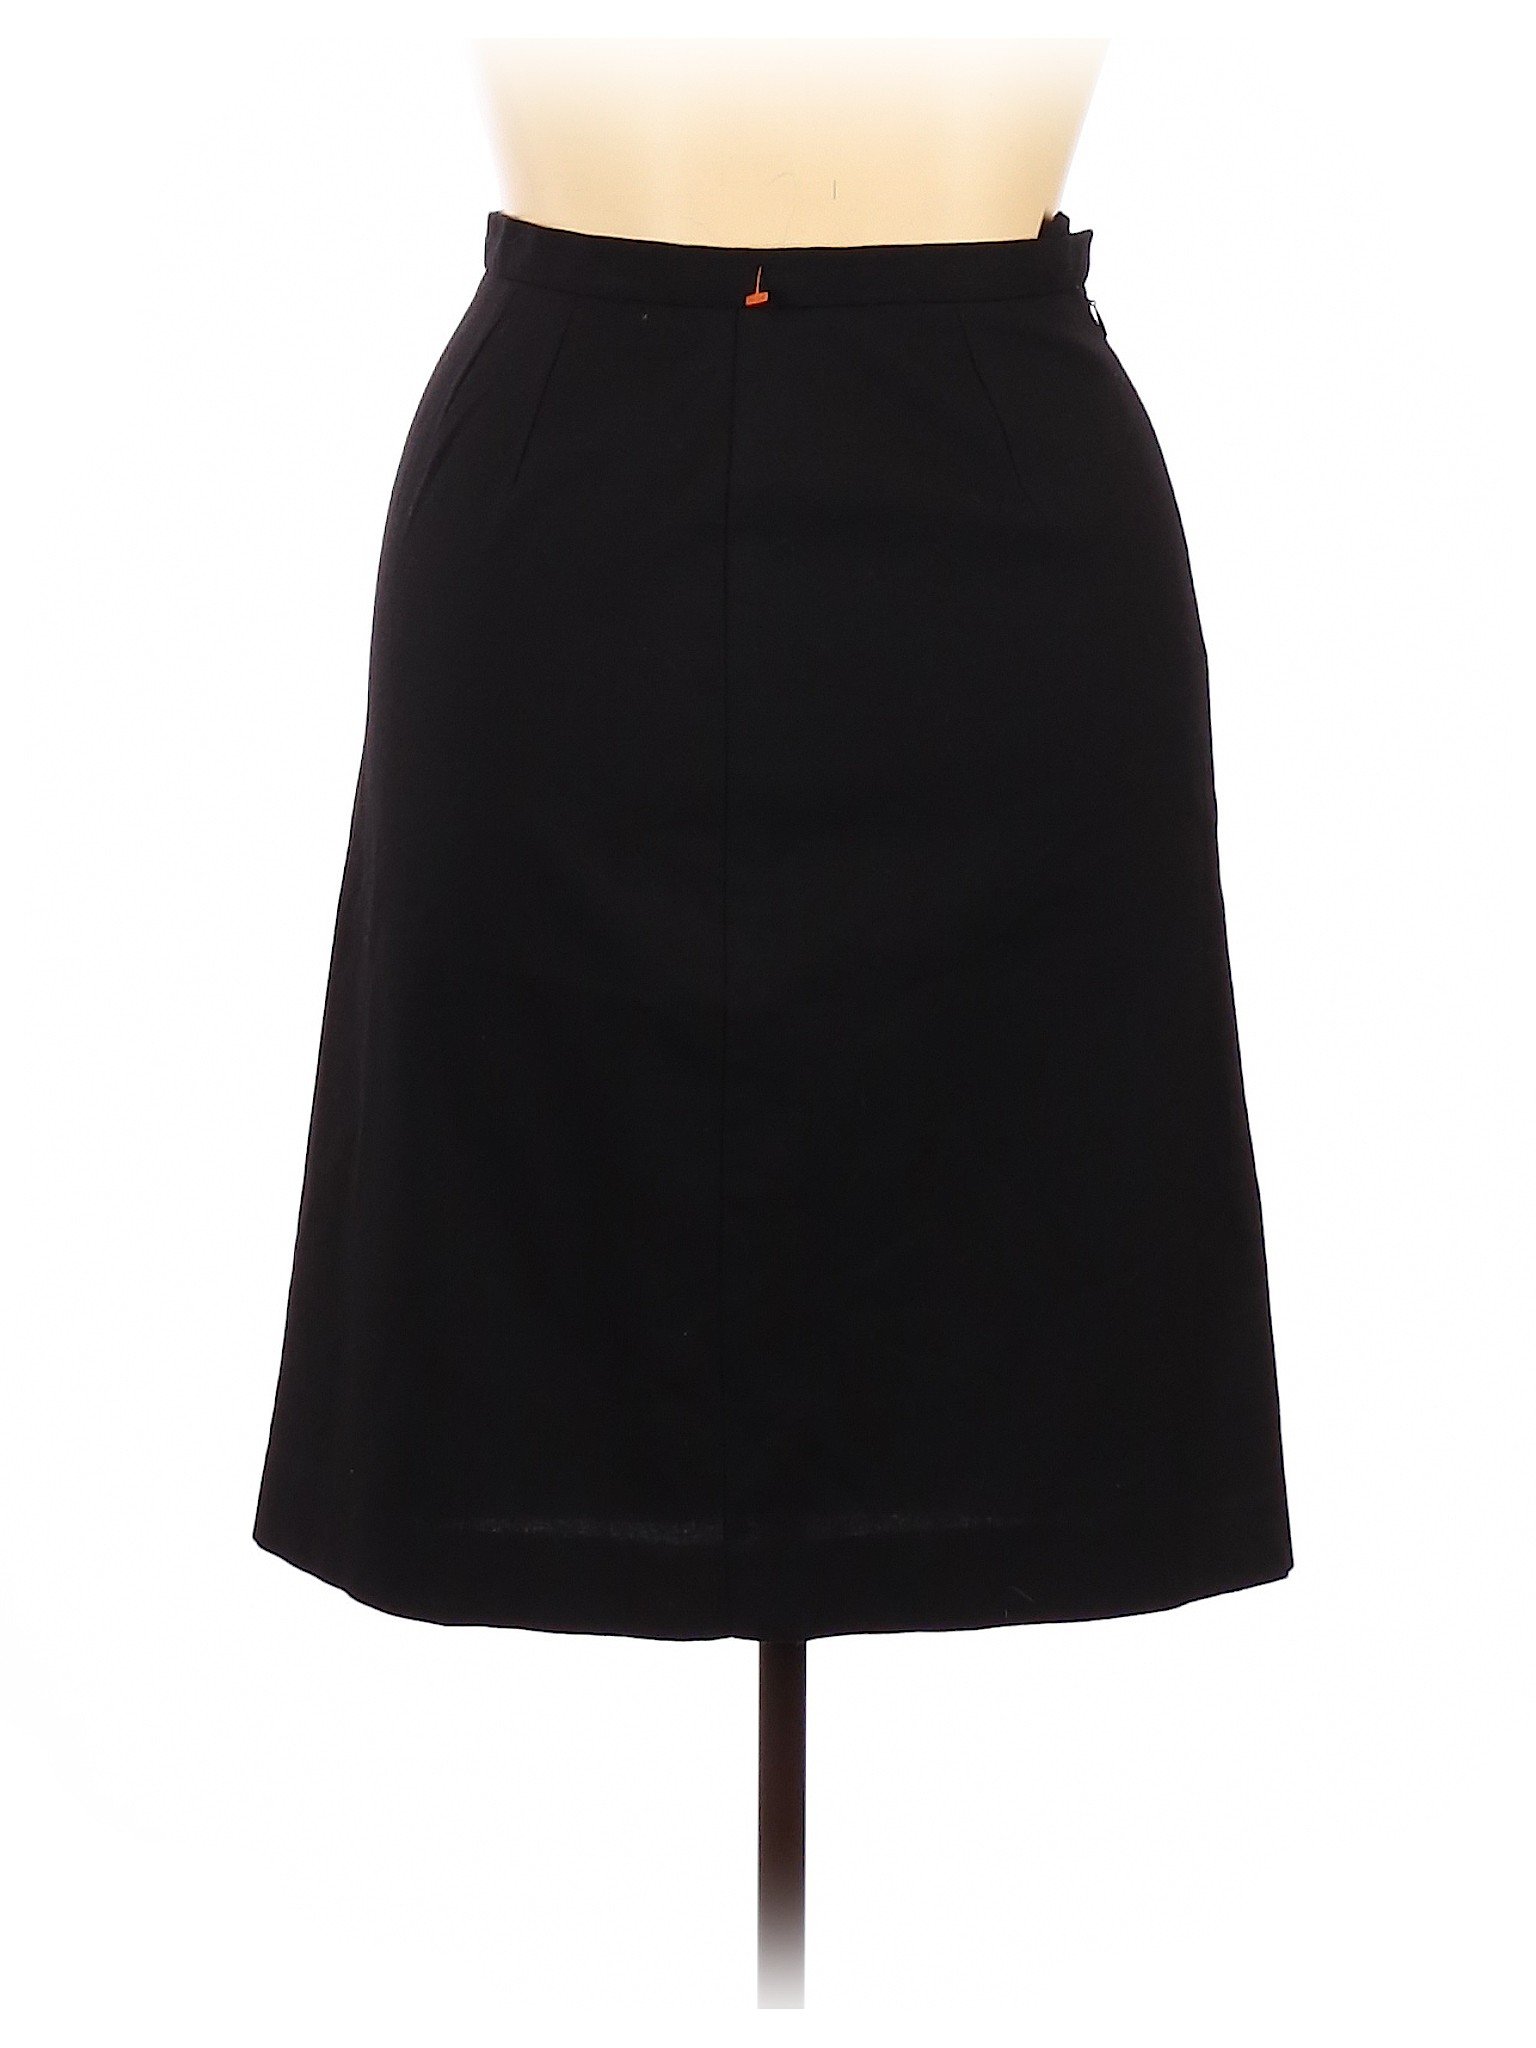 Hillard & Hanson Women Black Casual Skirt 14 | eBay